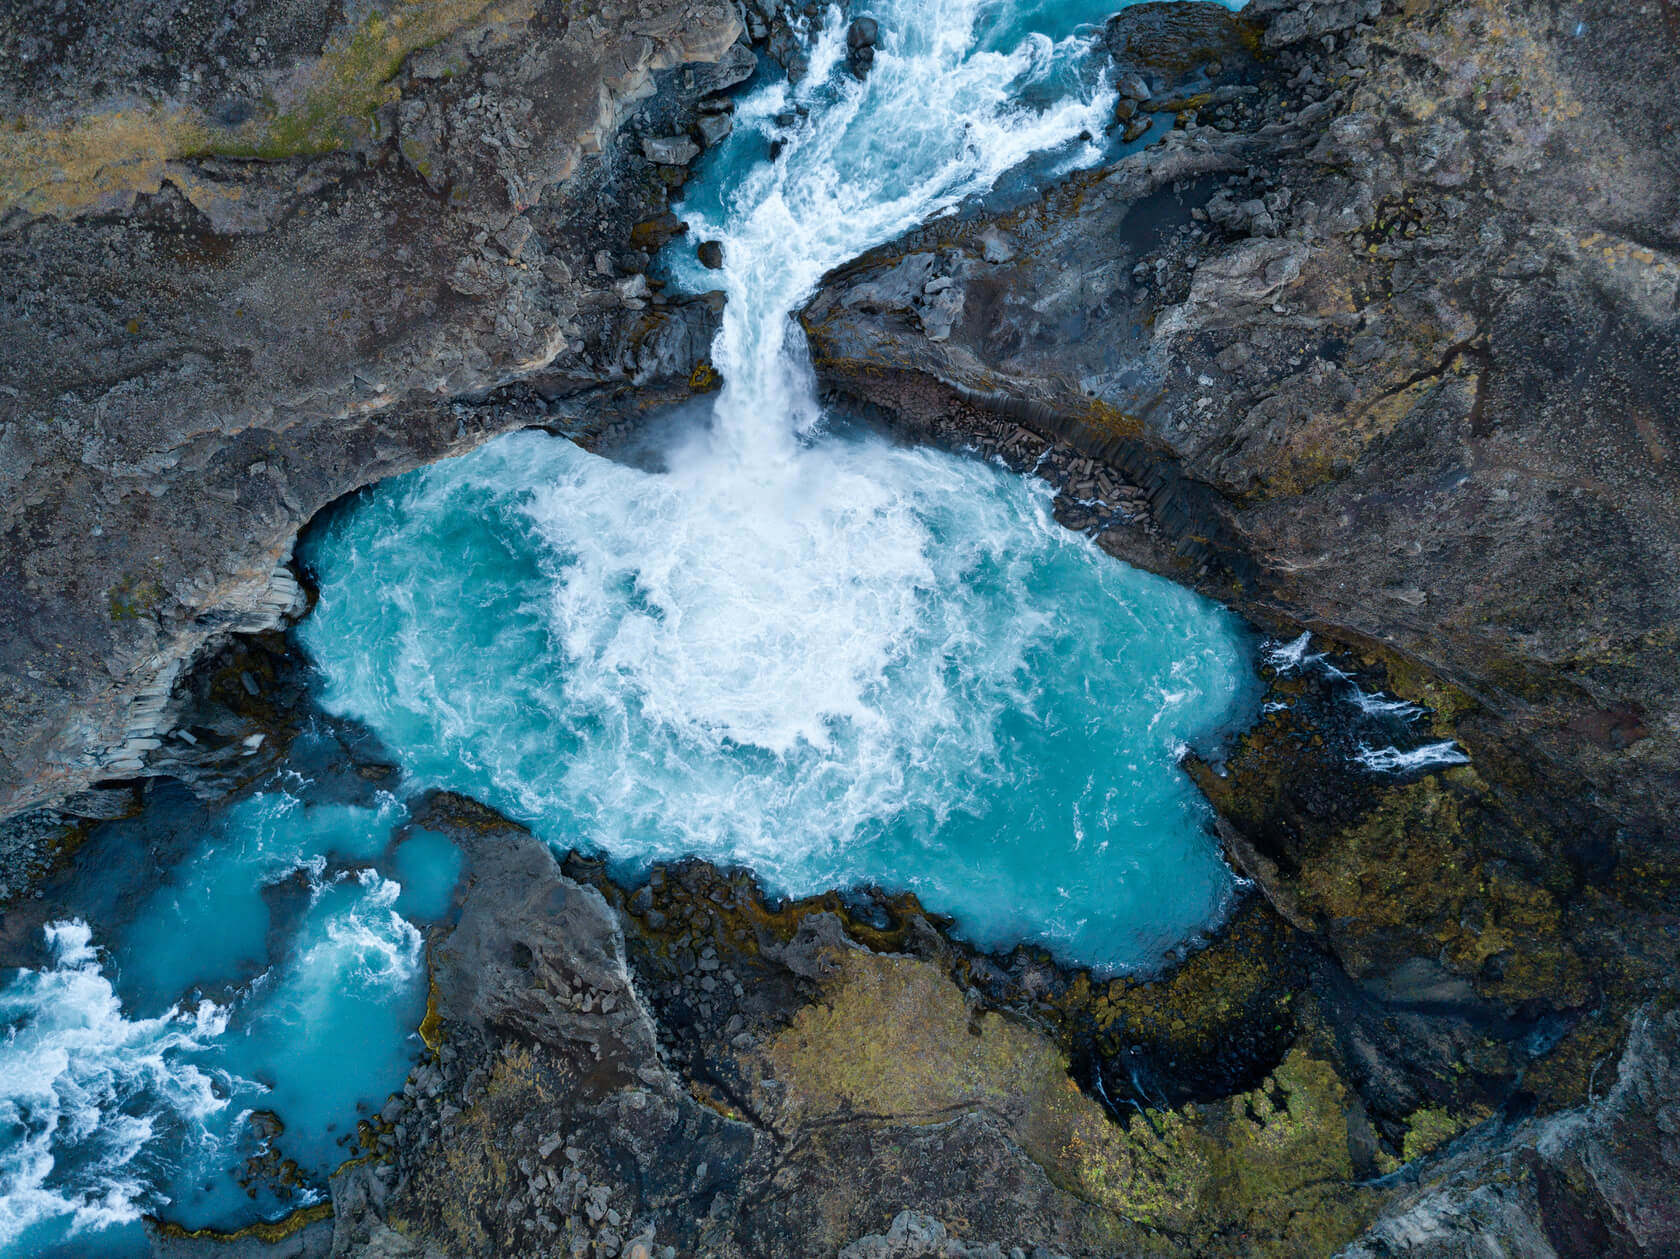 View of Aldeyjarfoss waterfall among the rocks in Iceland